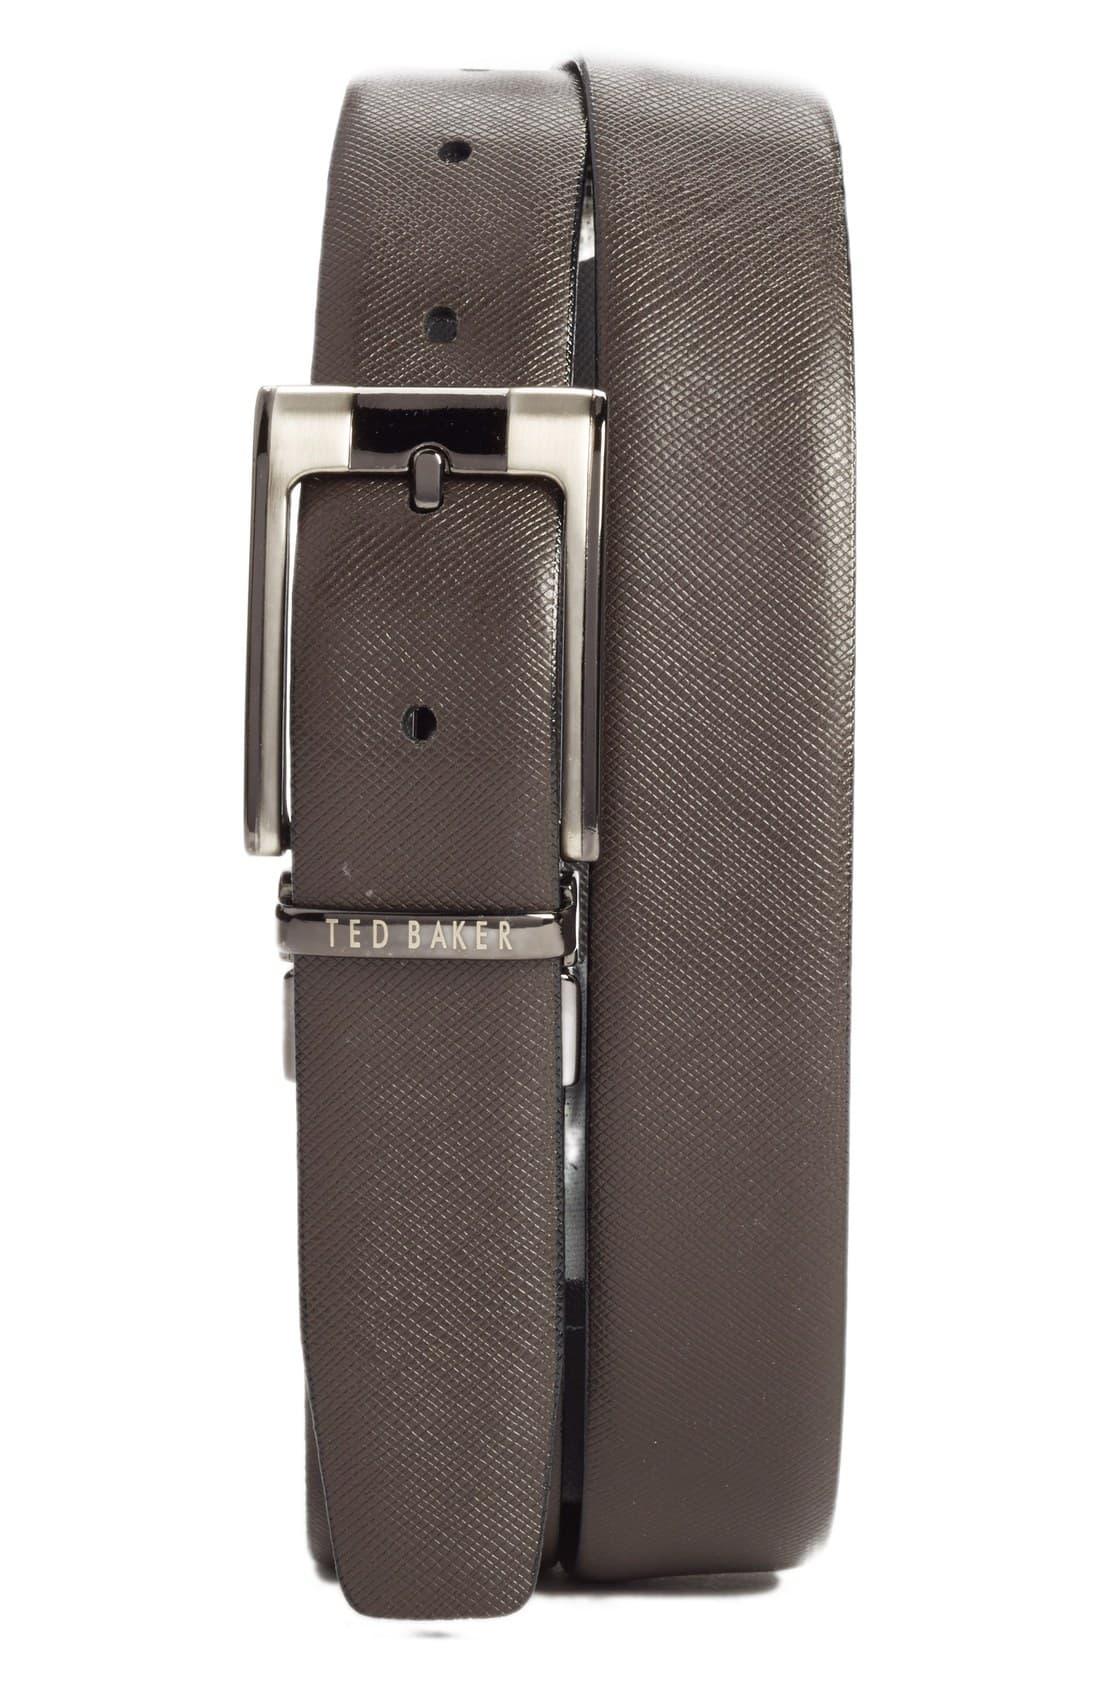 Ted Baker Reversible Leather Belt in Black/ Brown (Black) for Men - Lyst